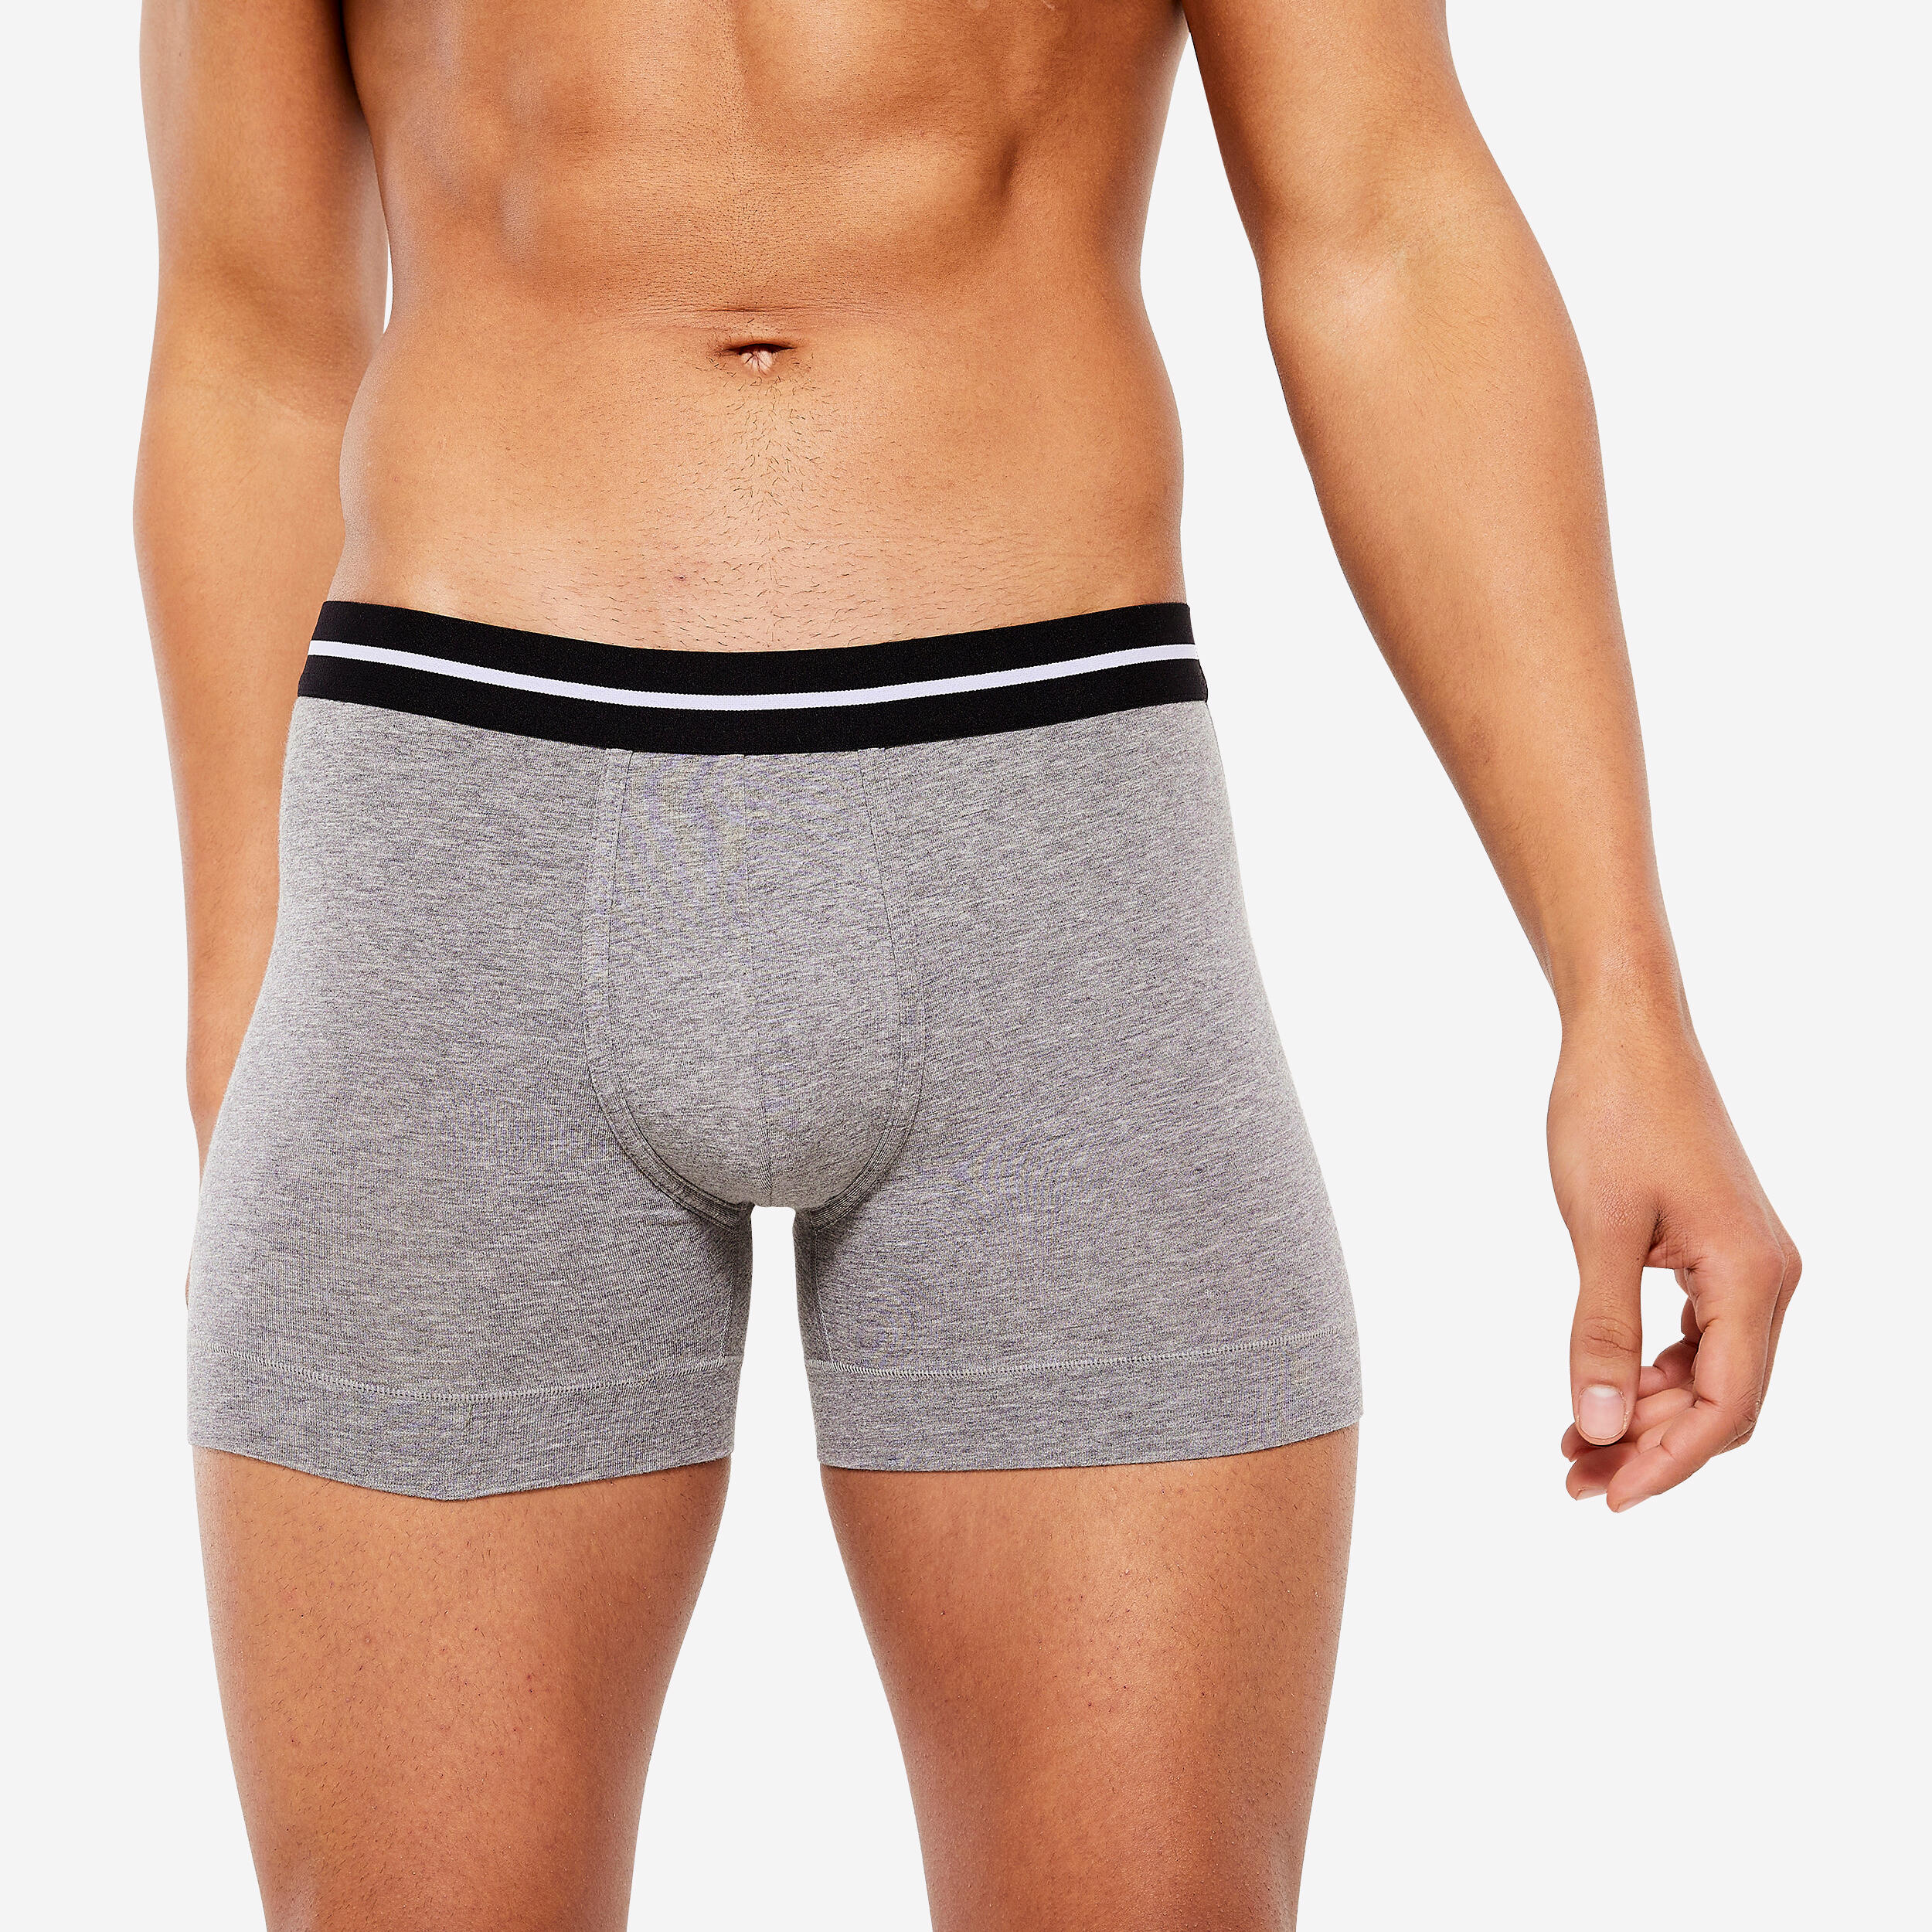 Decathlon sports underwear men's summer quick-drying breathable tight  scrotum convex support running anti-wear leg briefs TSC2